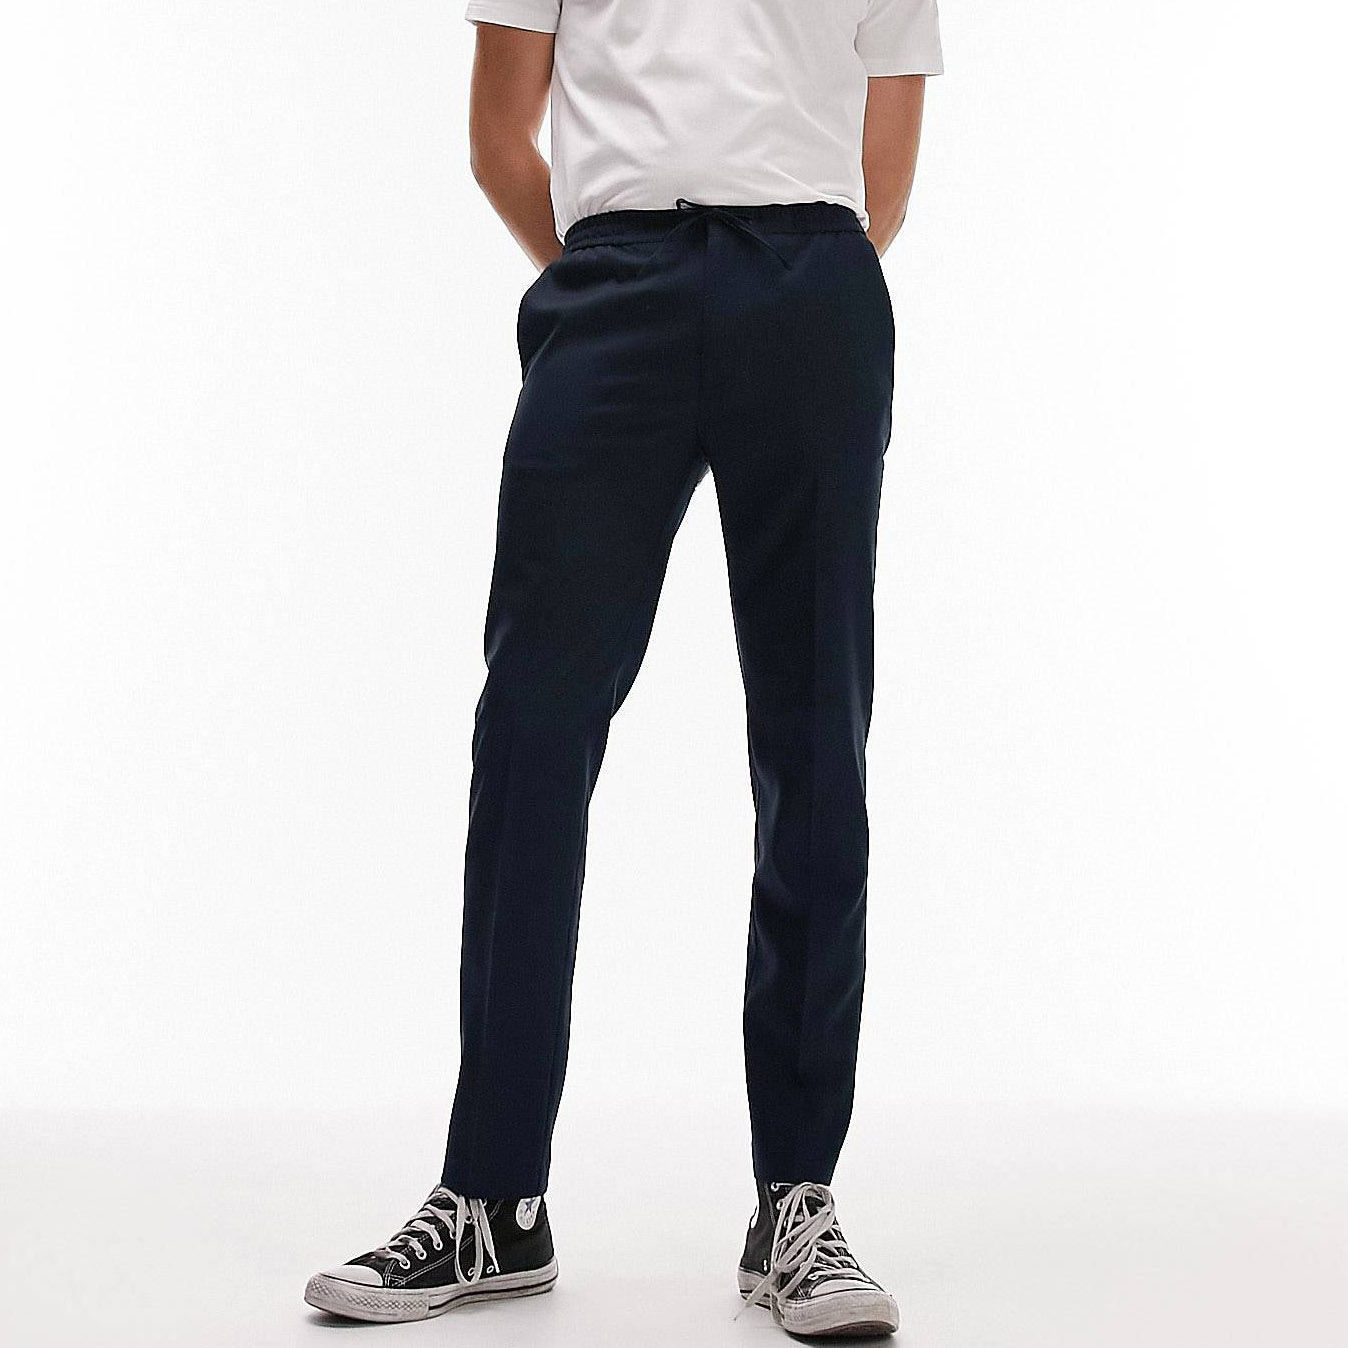 Брюки Topman Skinny Smart With Elasticated Waistband, темно-синий зауженные брюки с эластичным поясом zarina 9421209702 серый 48